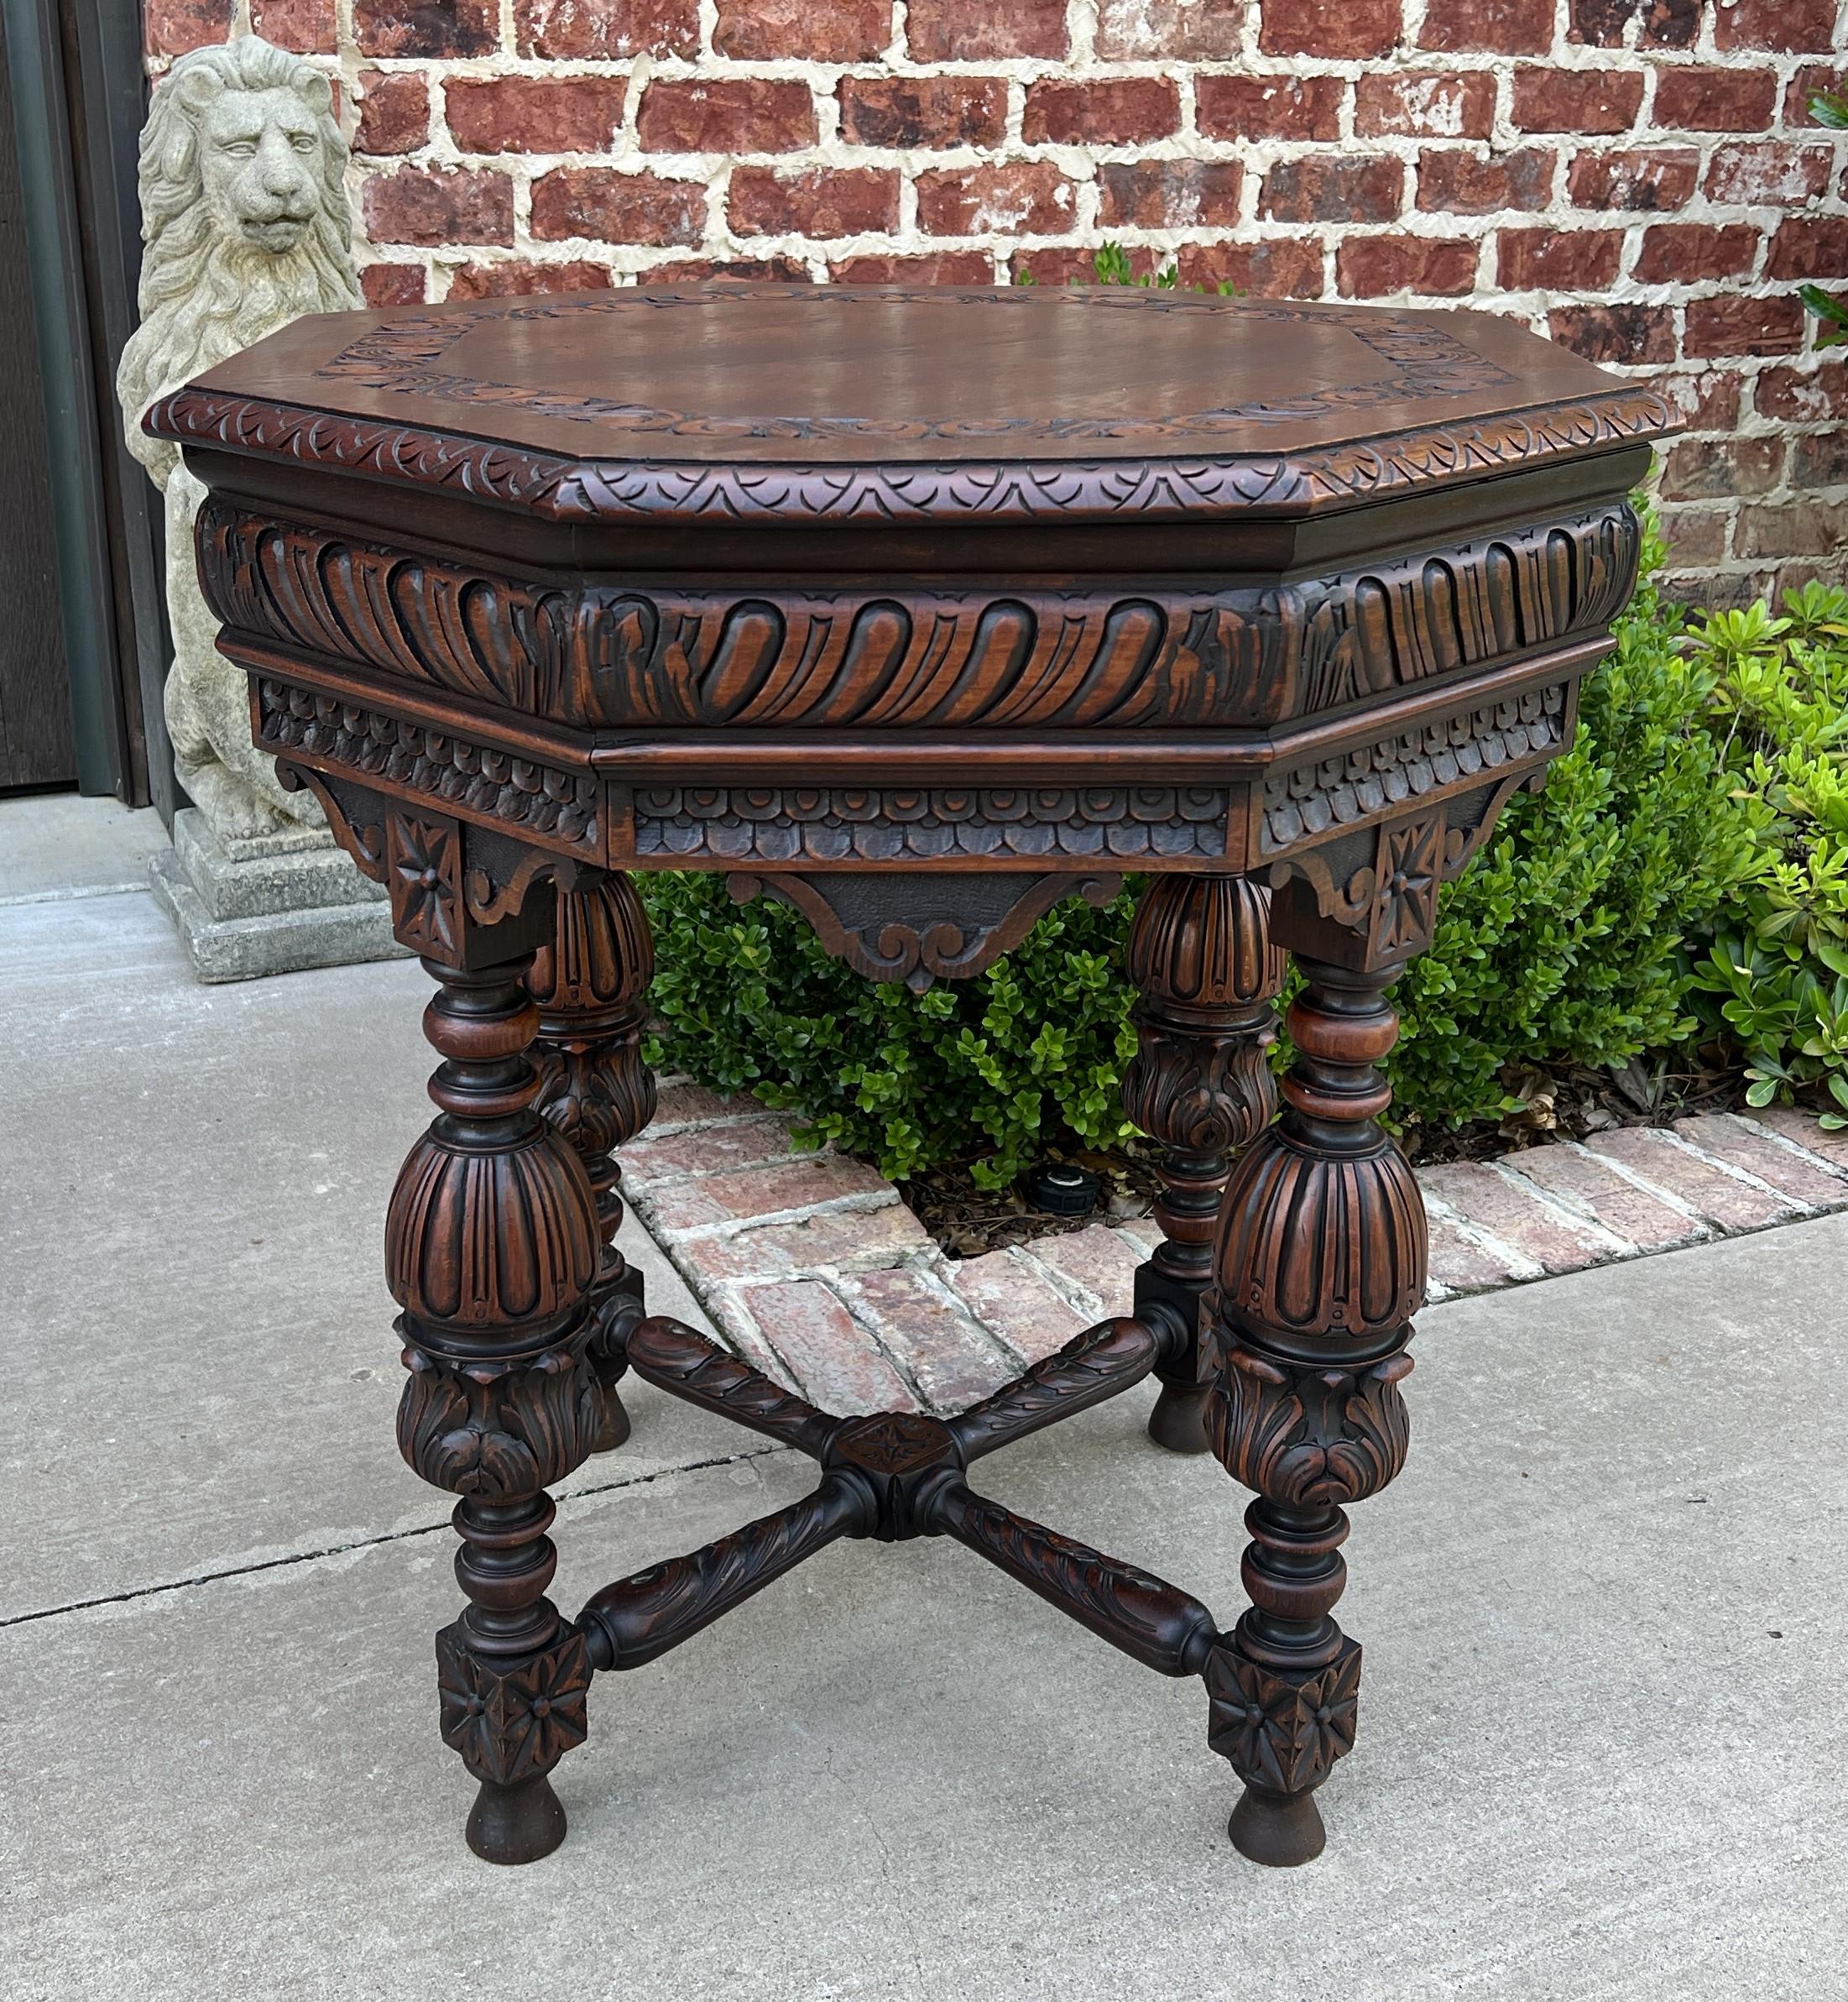 Antique French Table Octagonal Renaissance Revival Carved Oak, 19th Century For Sale 11